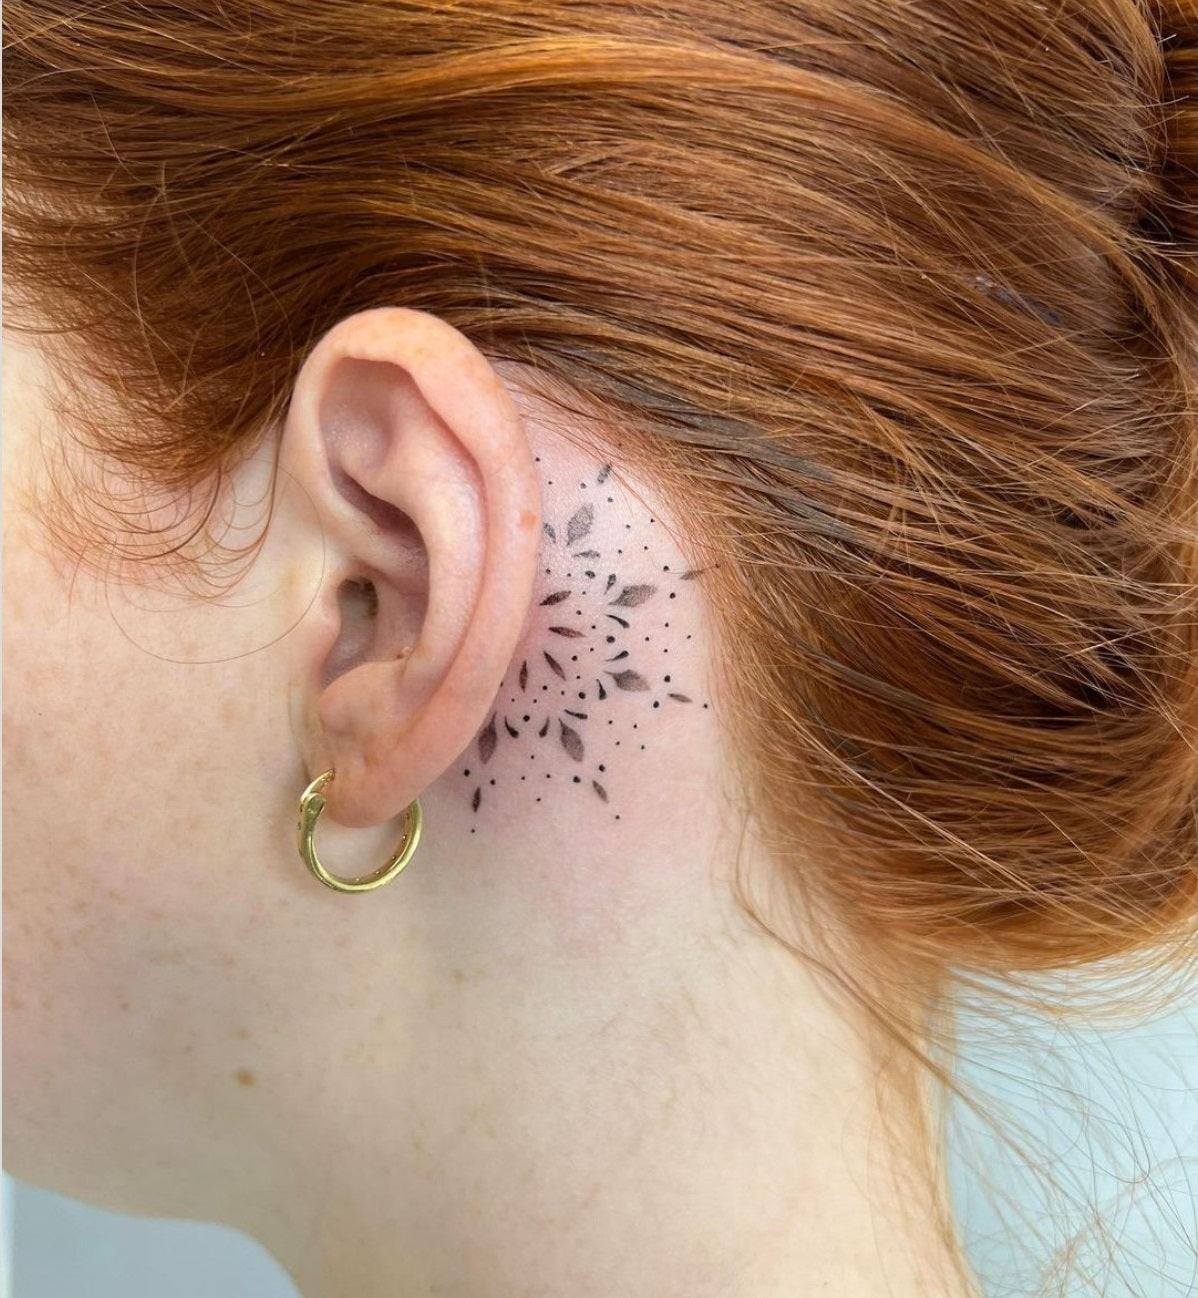 music tattoos in ear